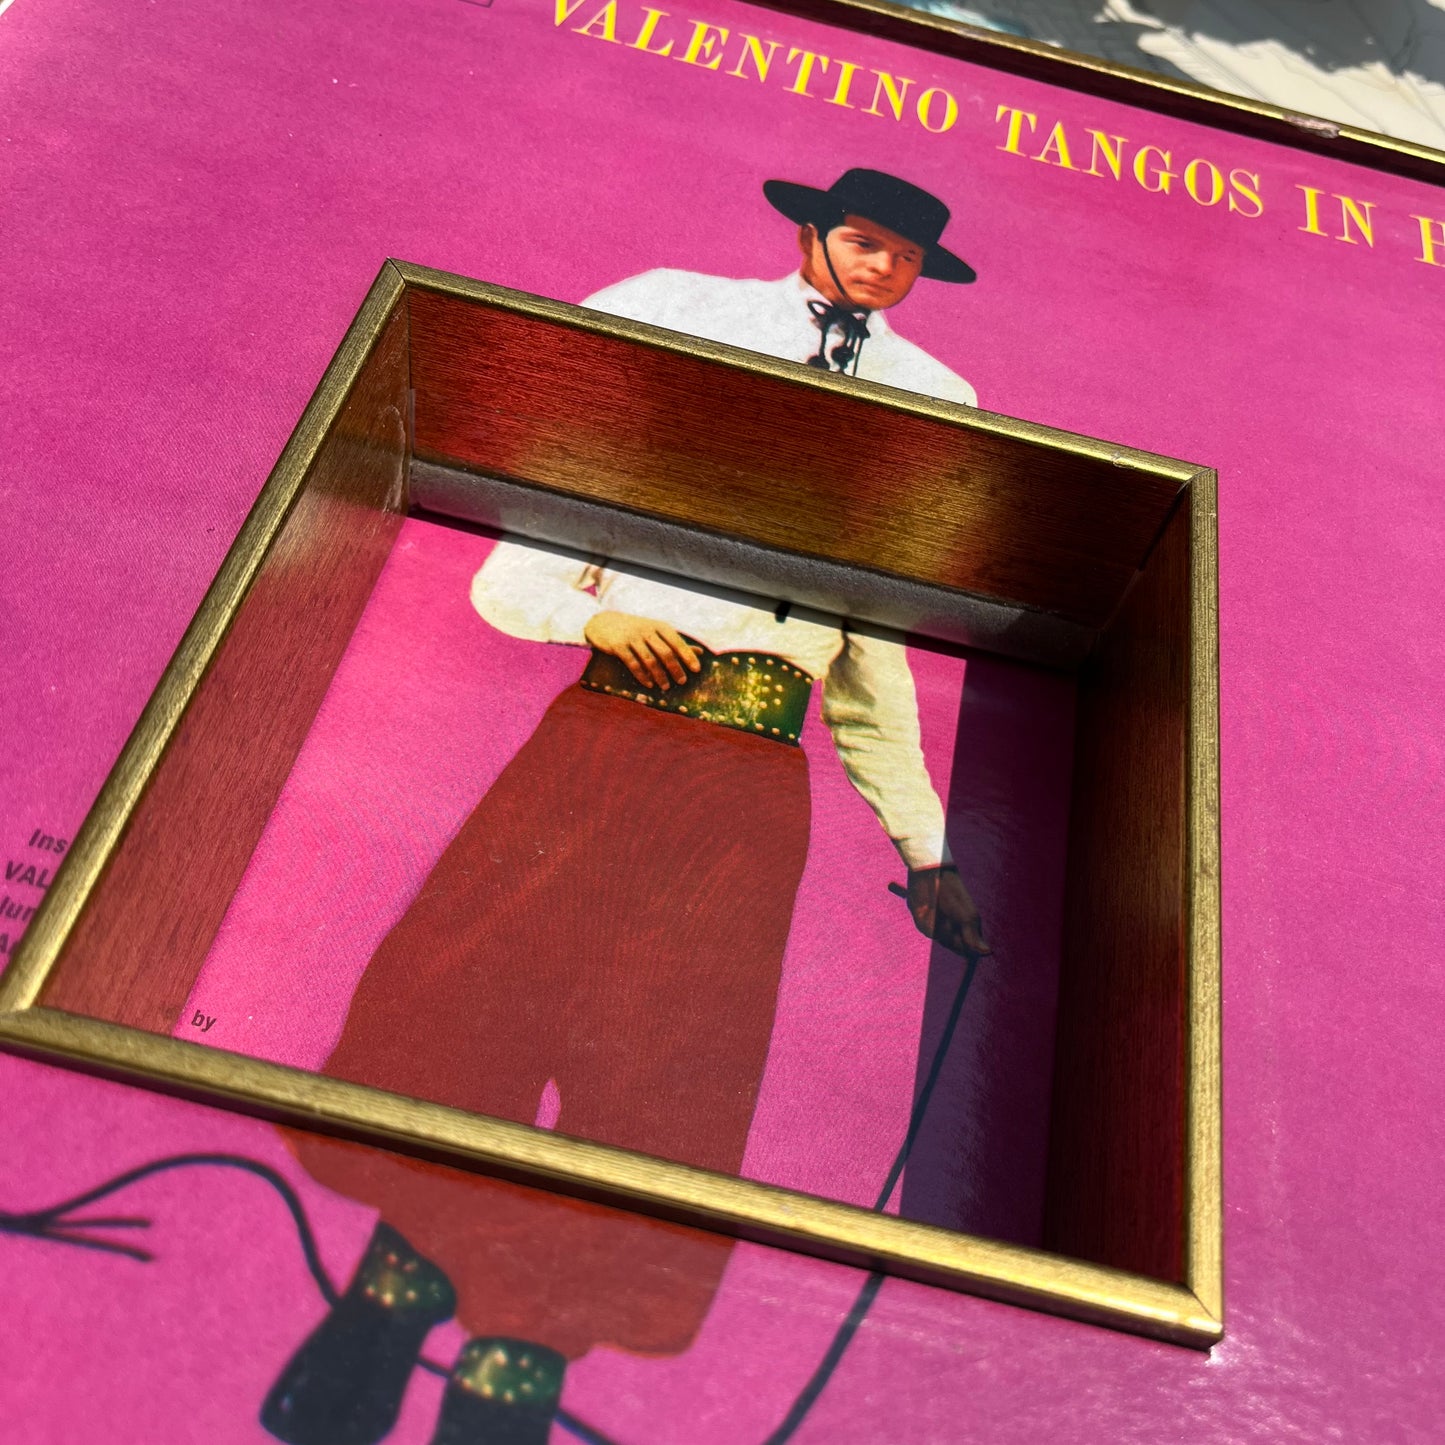 Vintage / Upcycled Valentino Tangos In Hi-Fi Album Cover Mini Shelf